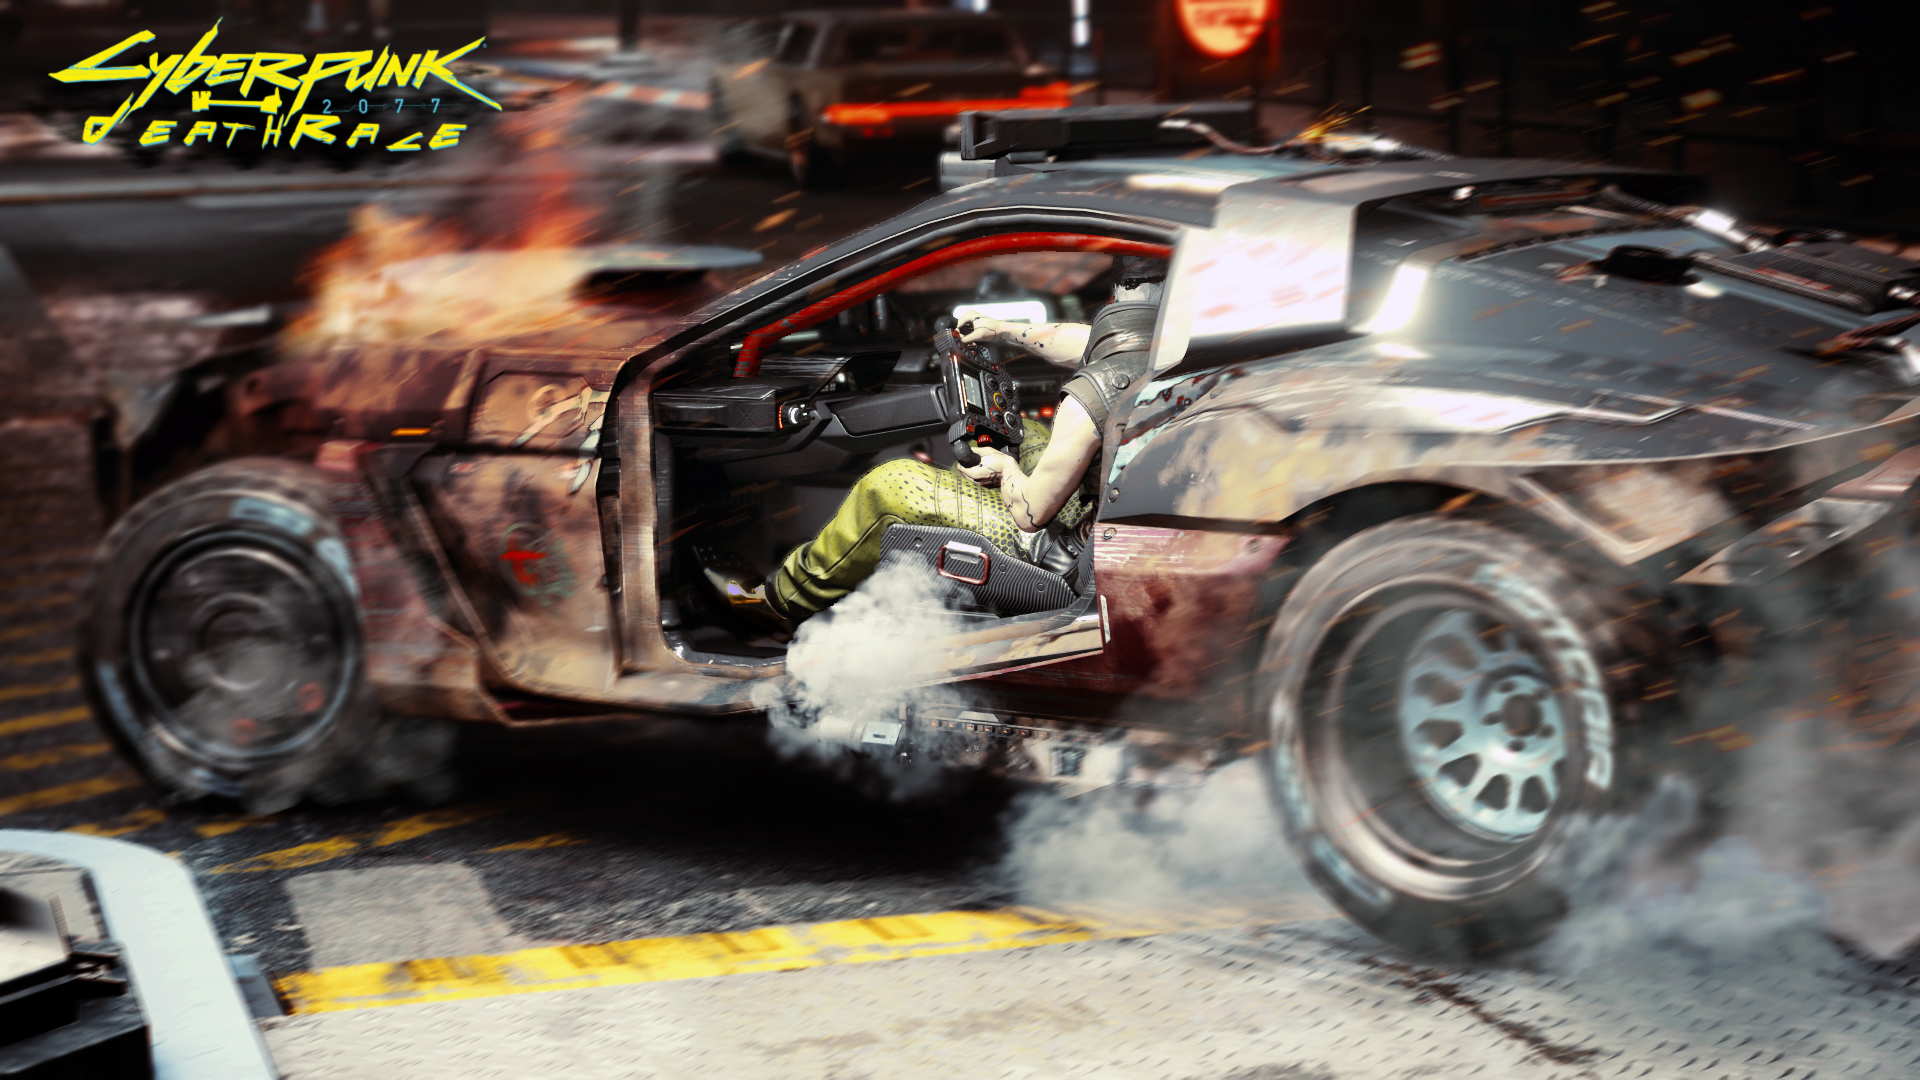 Cyberpunk Cyberpunk 2077 Car Race Cars Fire Smoke Deathrace 1920x1080